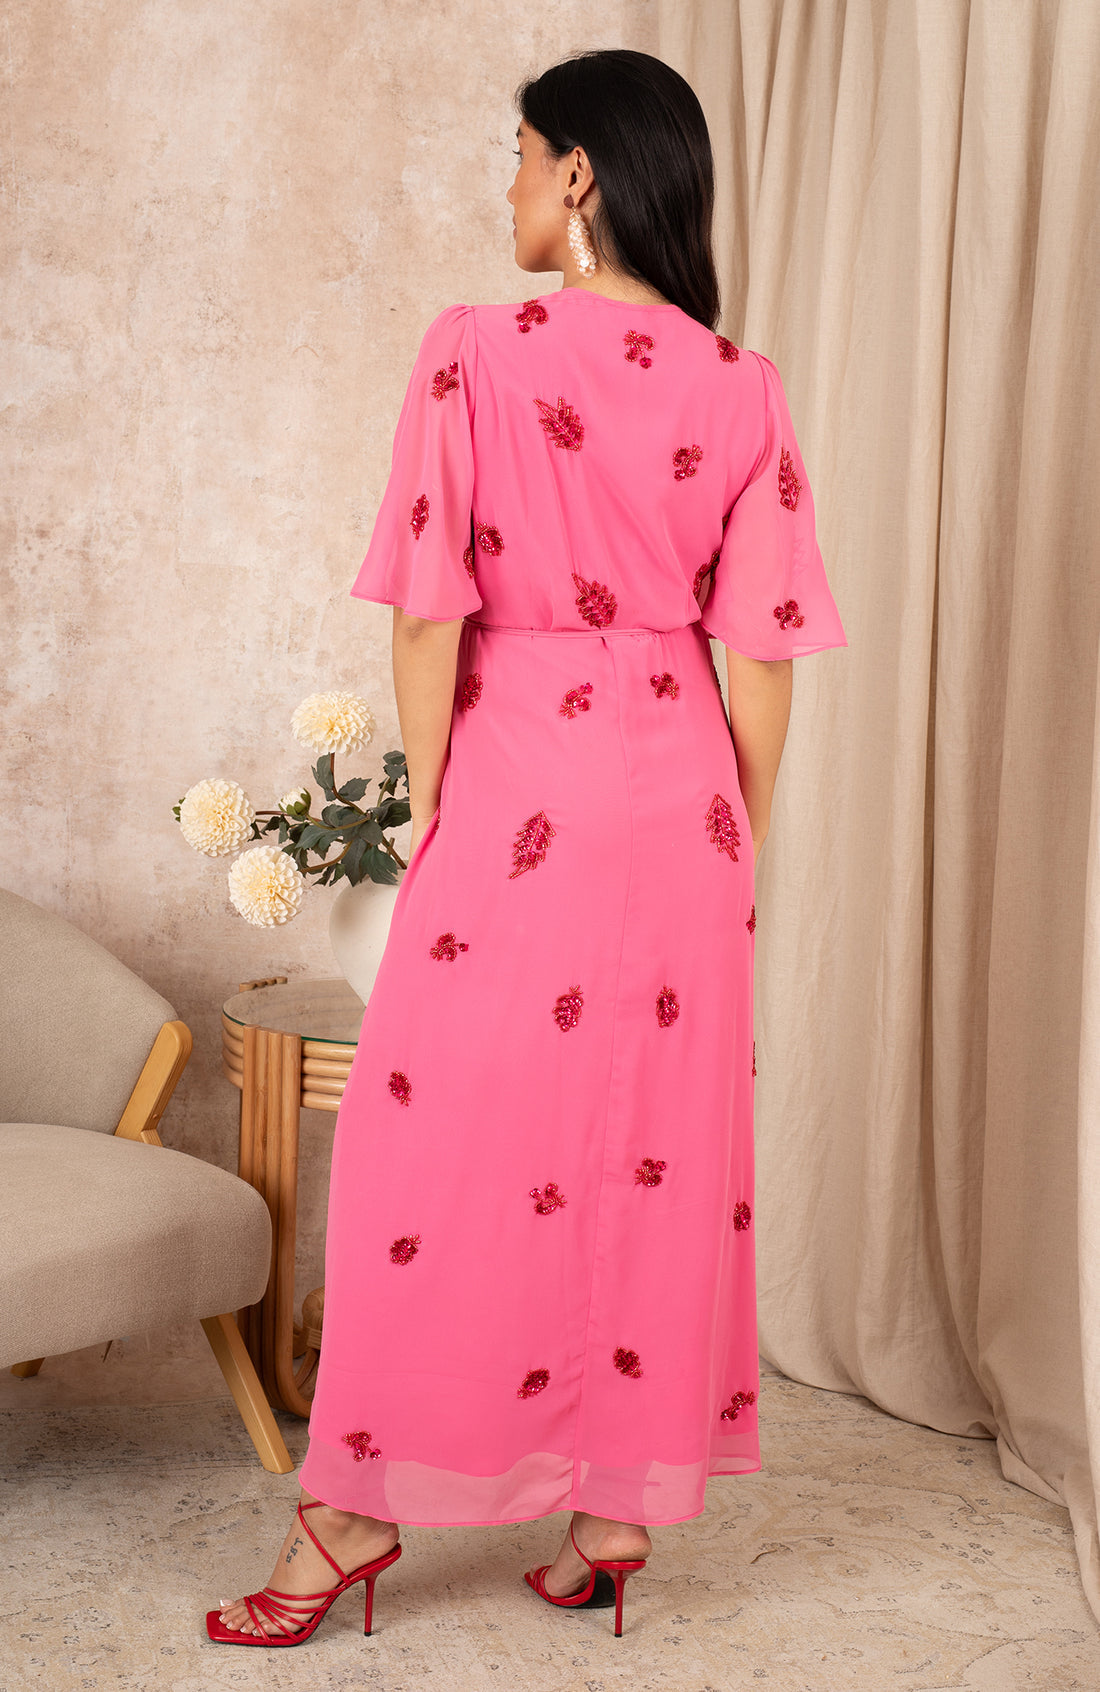 Hebe beaded pink dress | Hope & Ivy